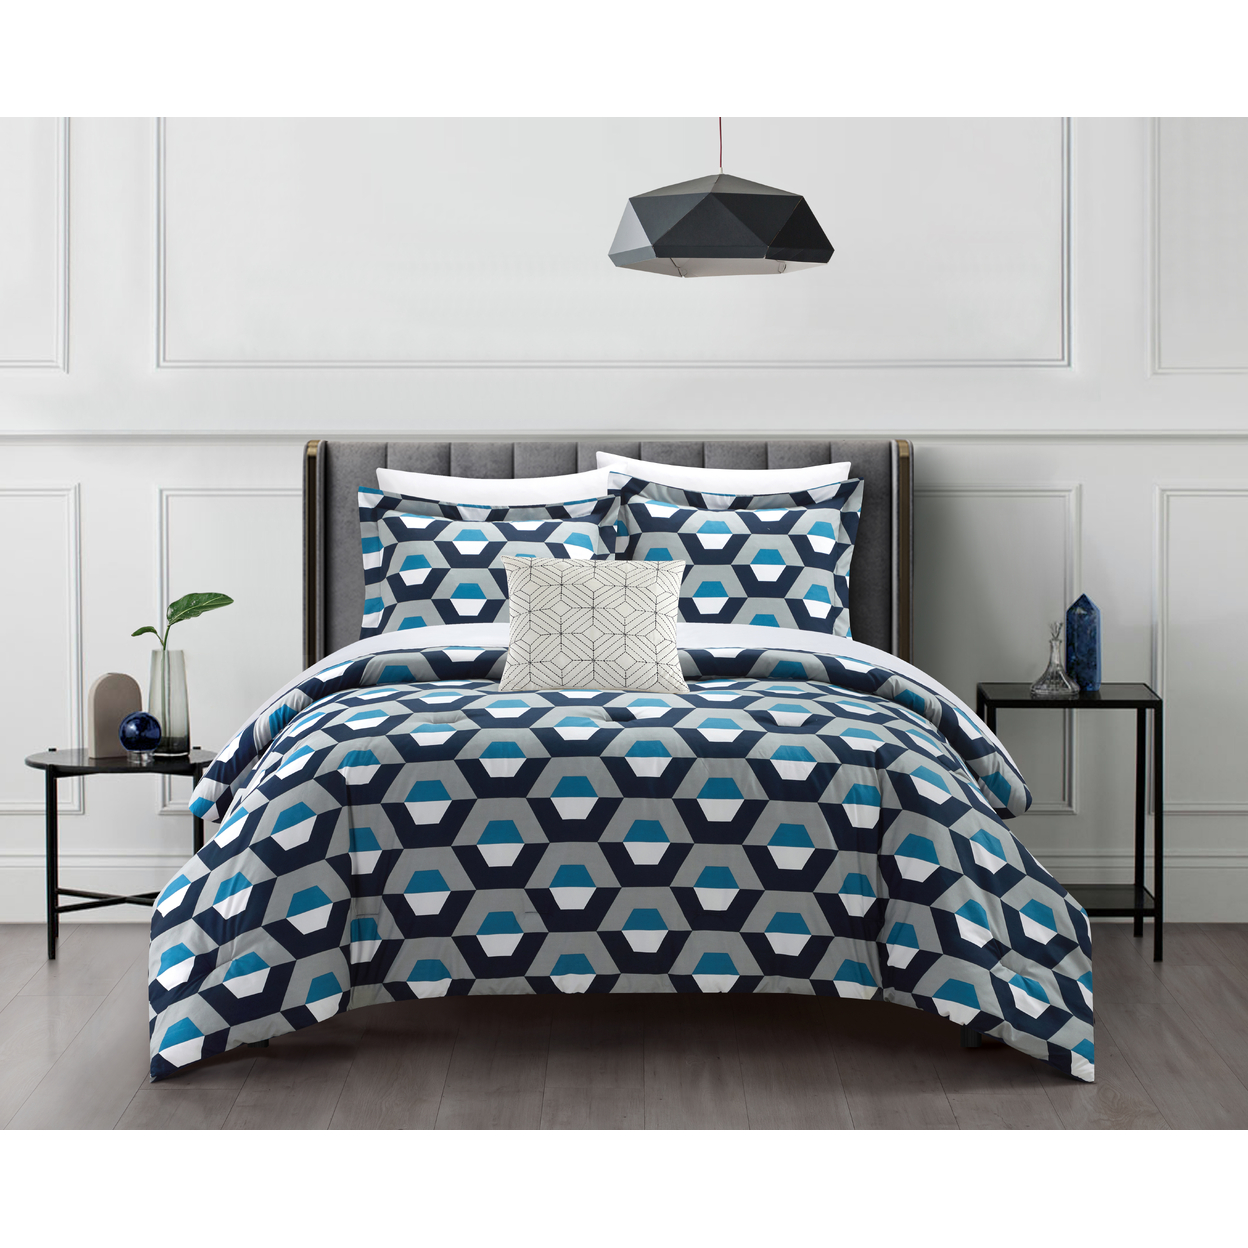 Matheus 4 Or 3 Piece Comforter Set Contemporary Geometric Hexagon Pattern Print Design Bedding - Blue, Twin - 3 Piece